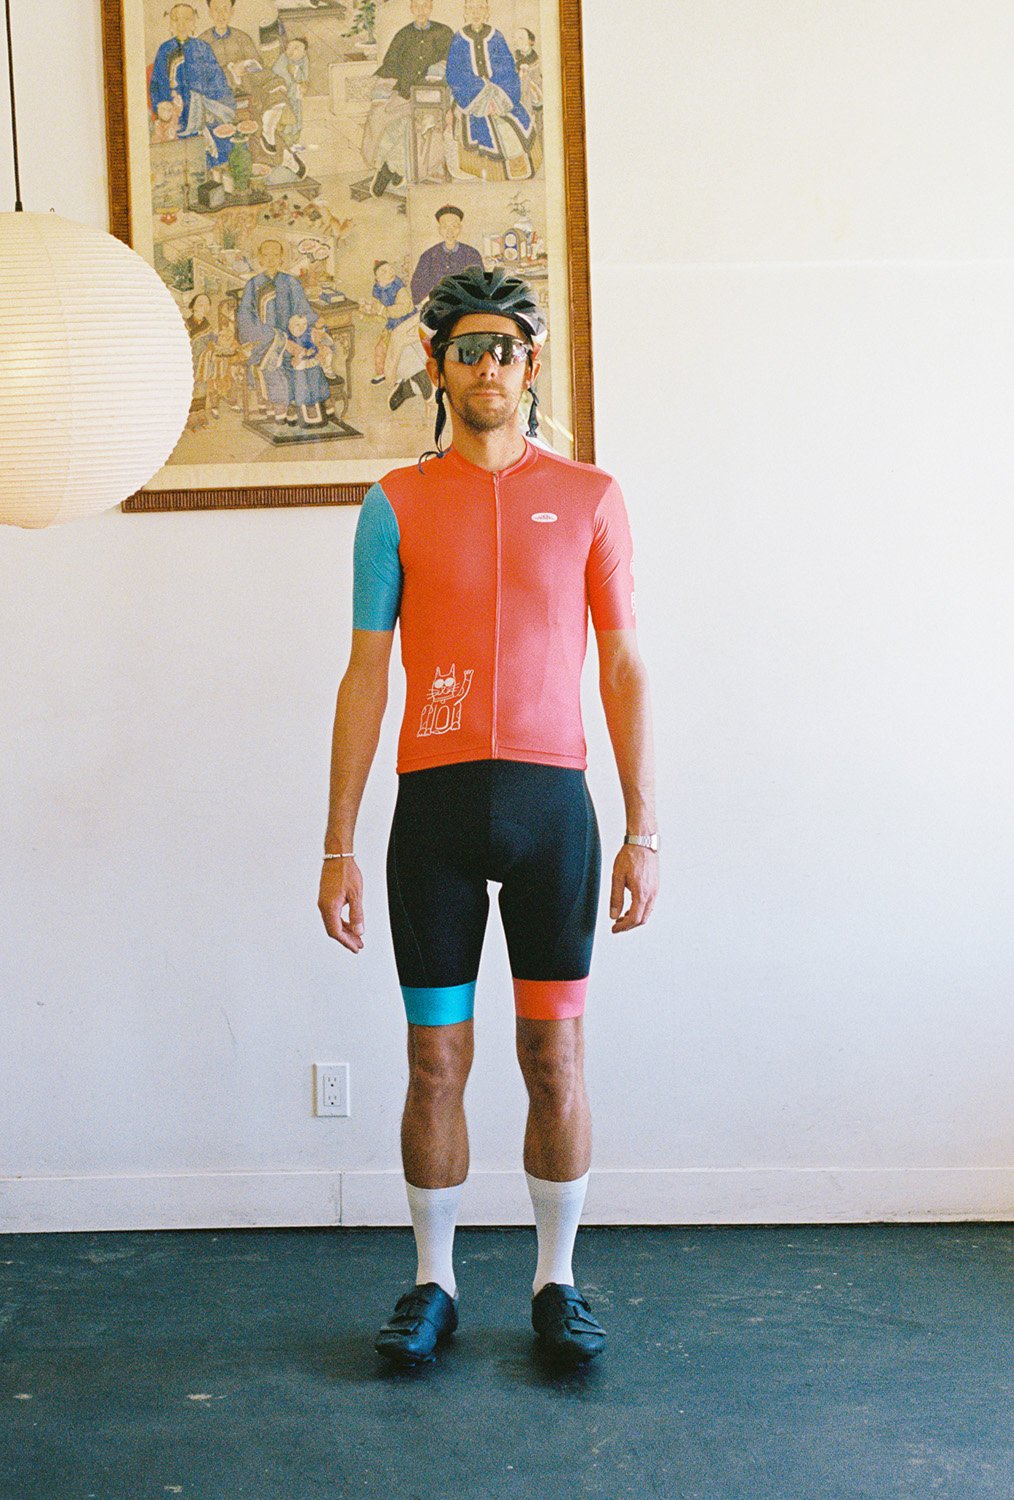 A man wearing a cycling uniform